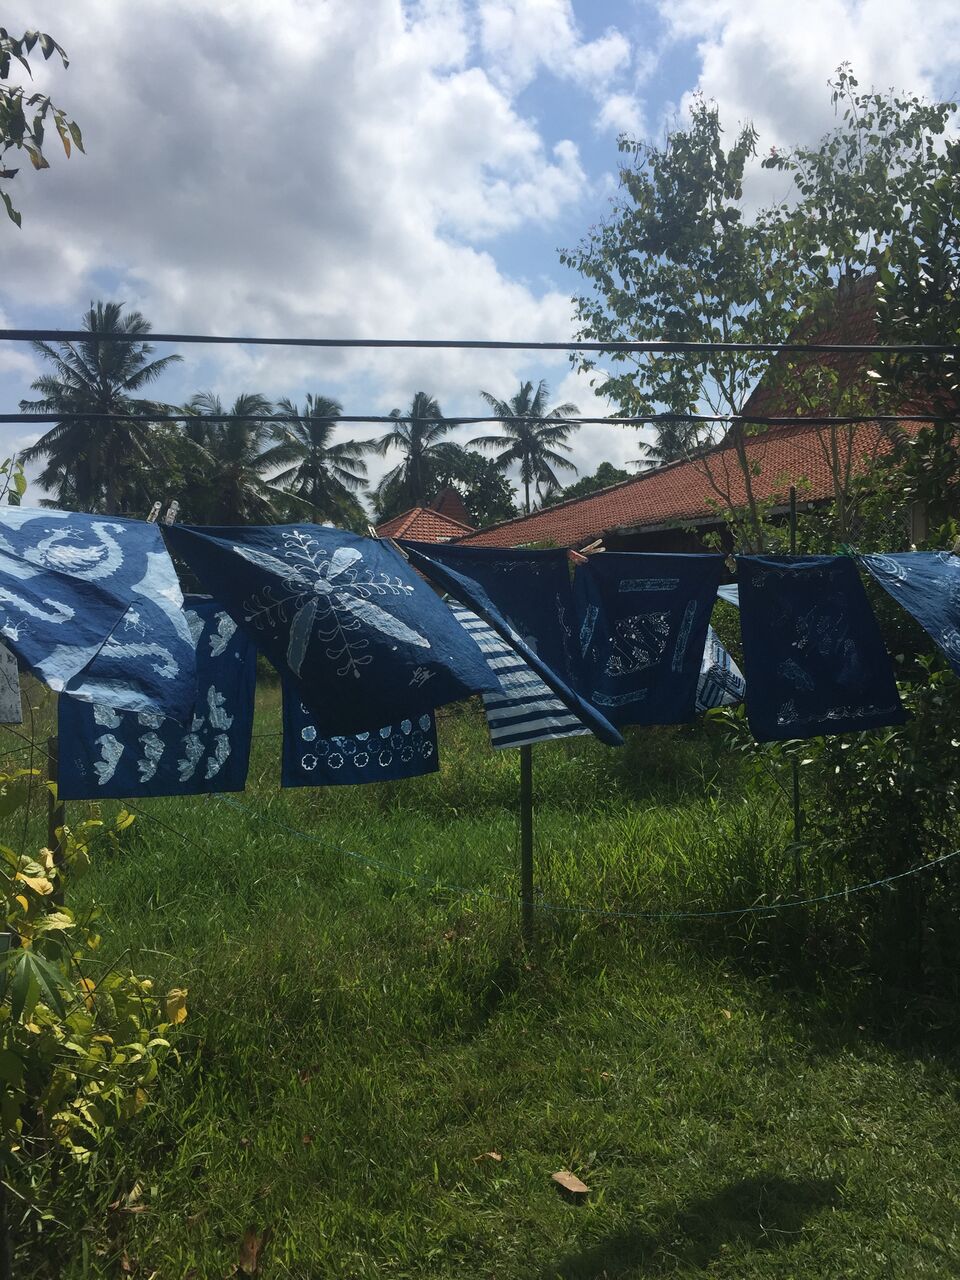 drying fabrics | Threads of Life | give back | EAT.PRAY.MOVE Yoga Retreats | Bali